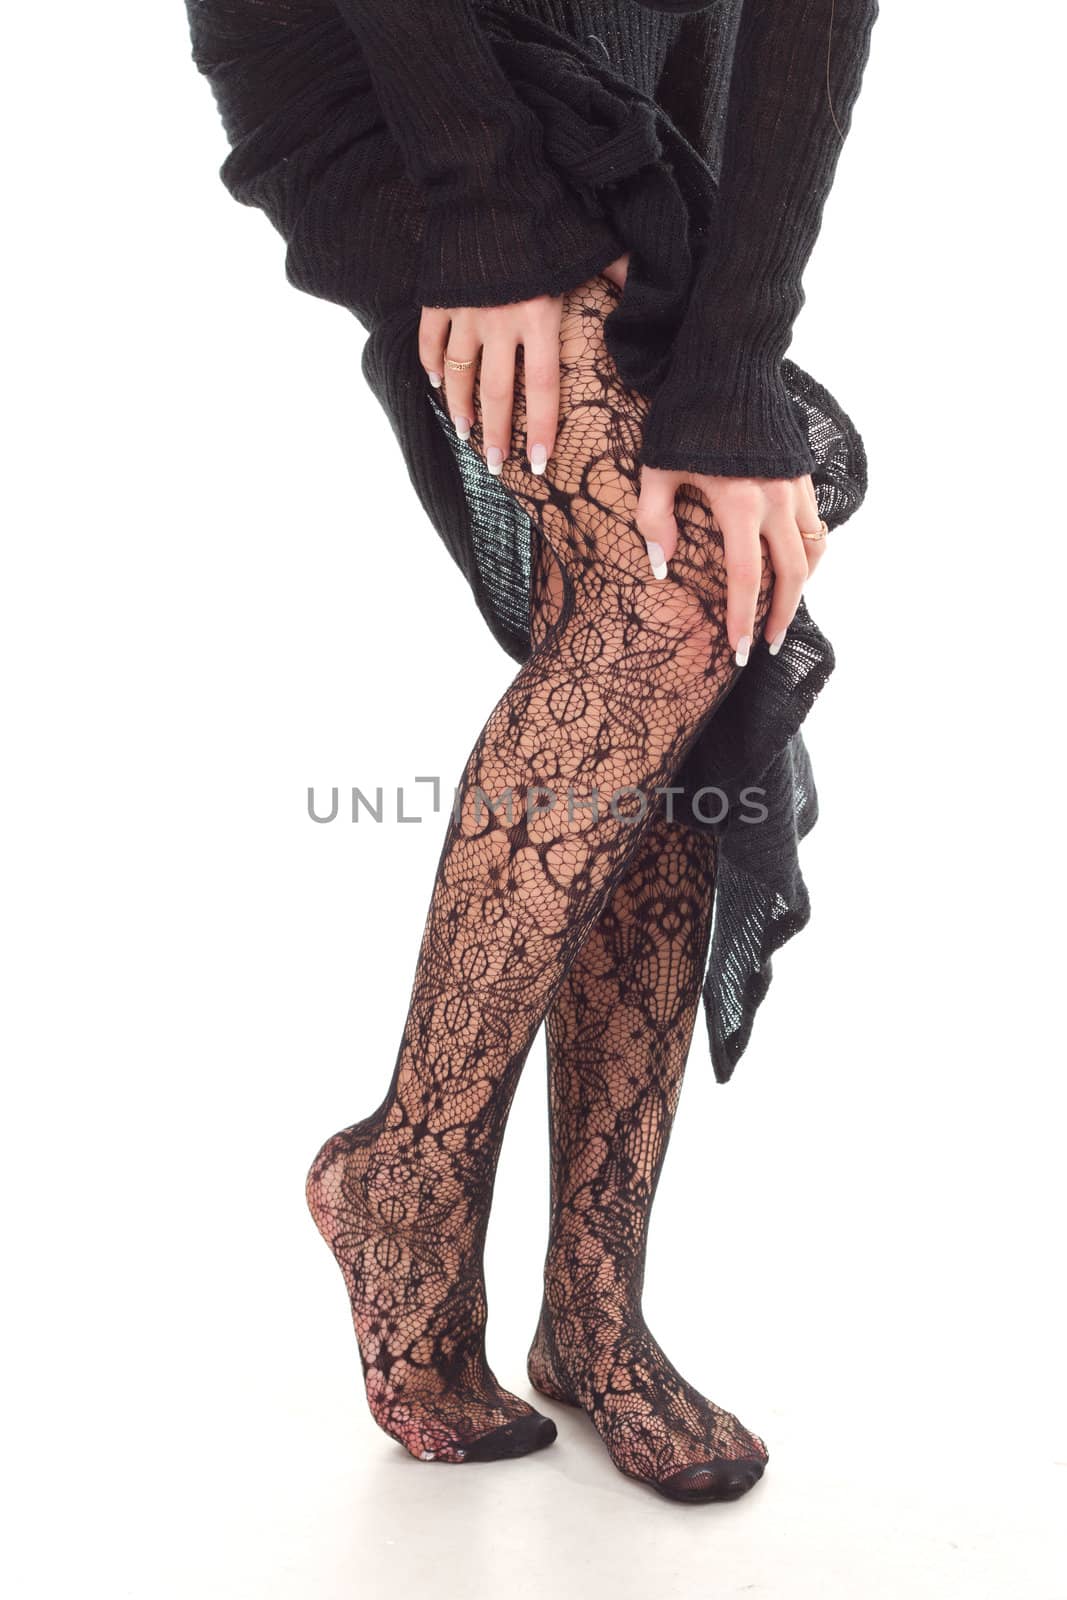 Beautiful woman legs in black stockings by victosha